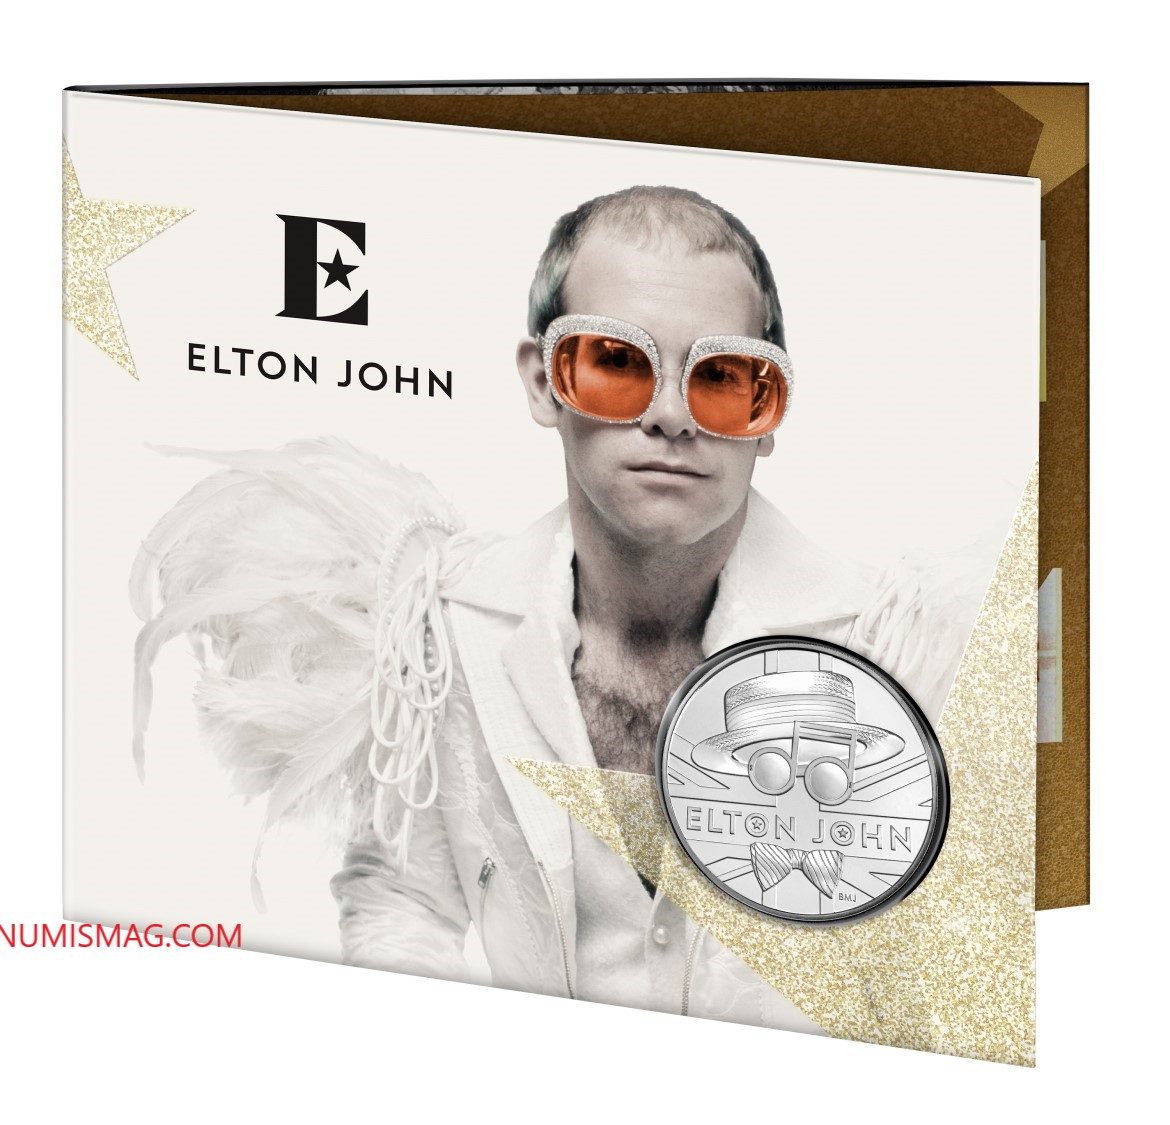 2020 commemorative coins celebrating Elton JOHN's career by Royal Mint